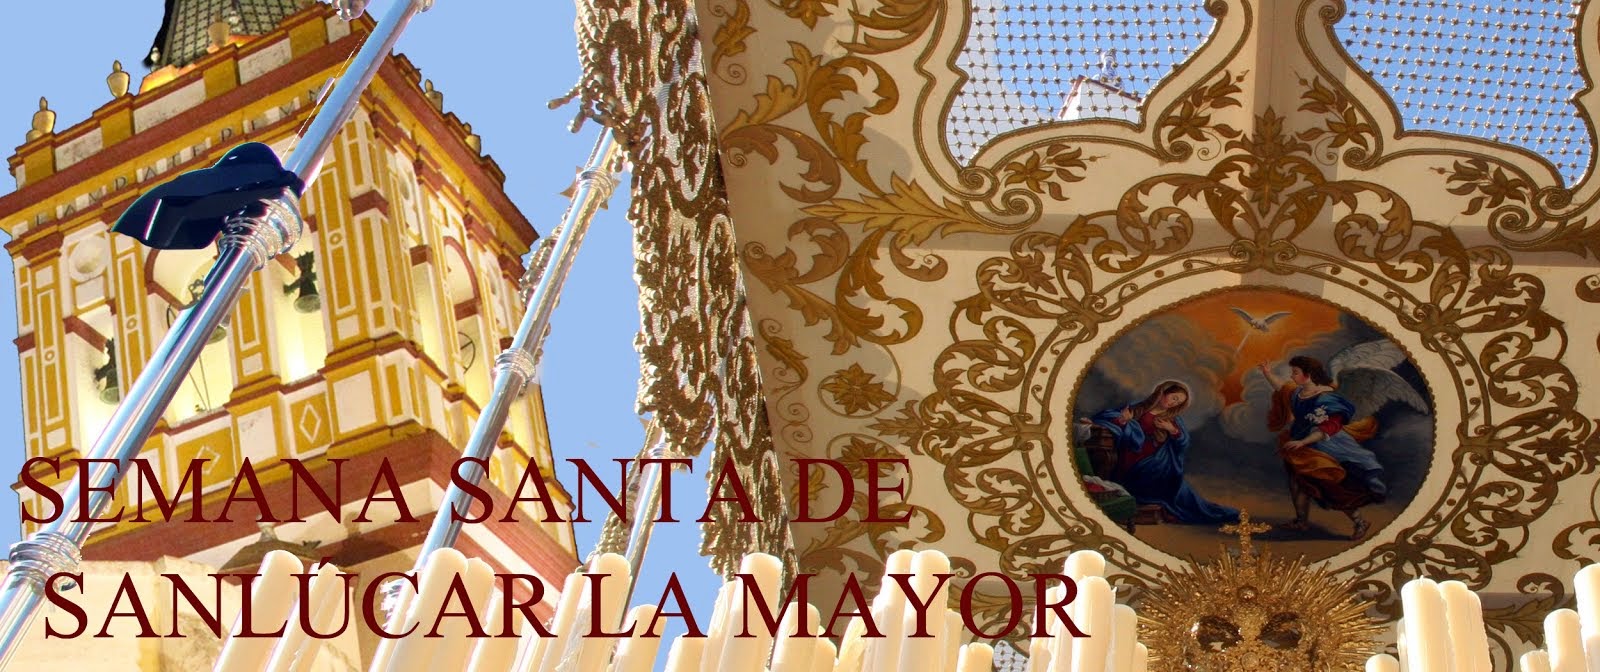 Semana Santa de Sanlúcar la Mayor